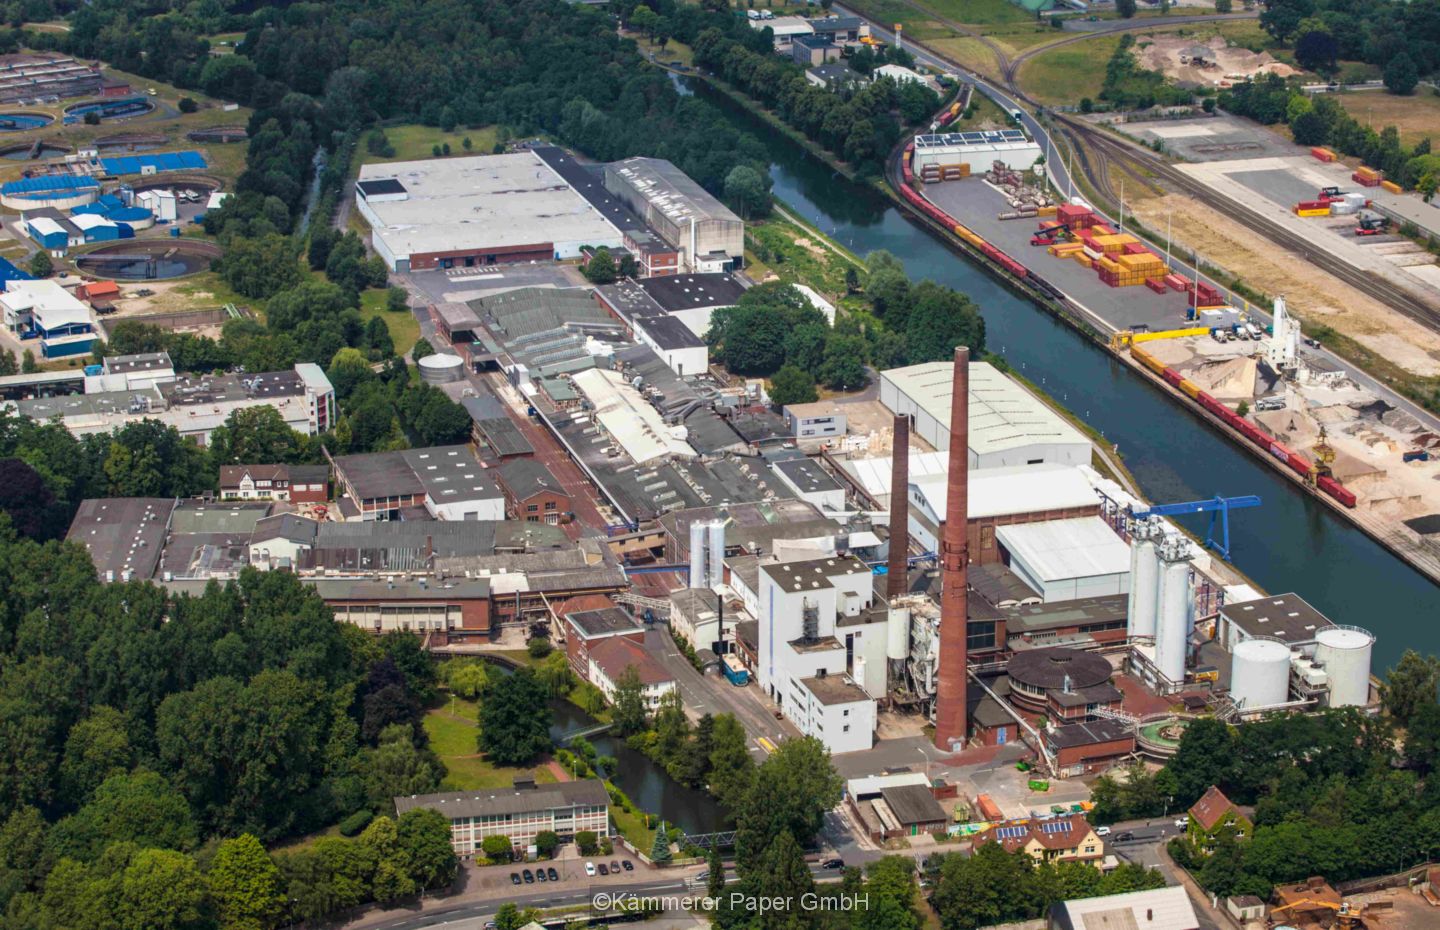 downstairs Northeast grown up Kämmerer Group restructures Osnabrück paper mill